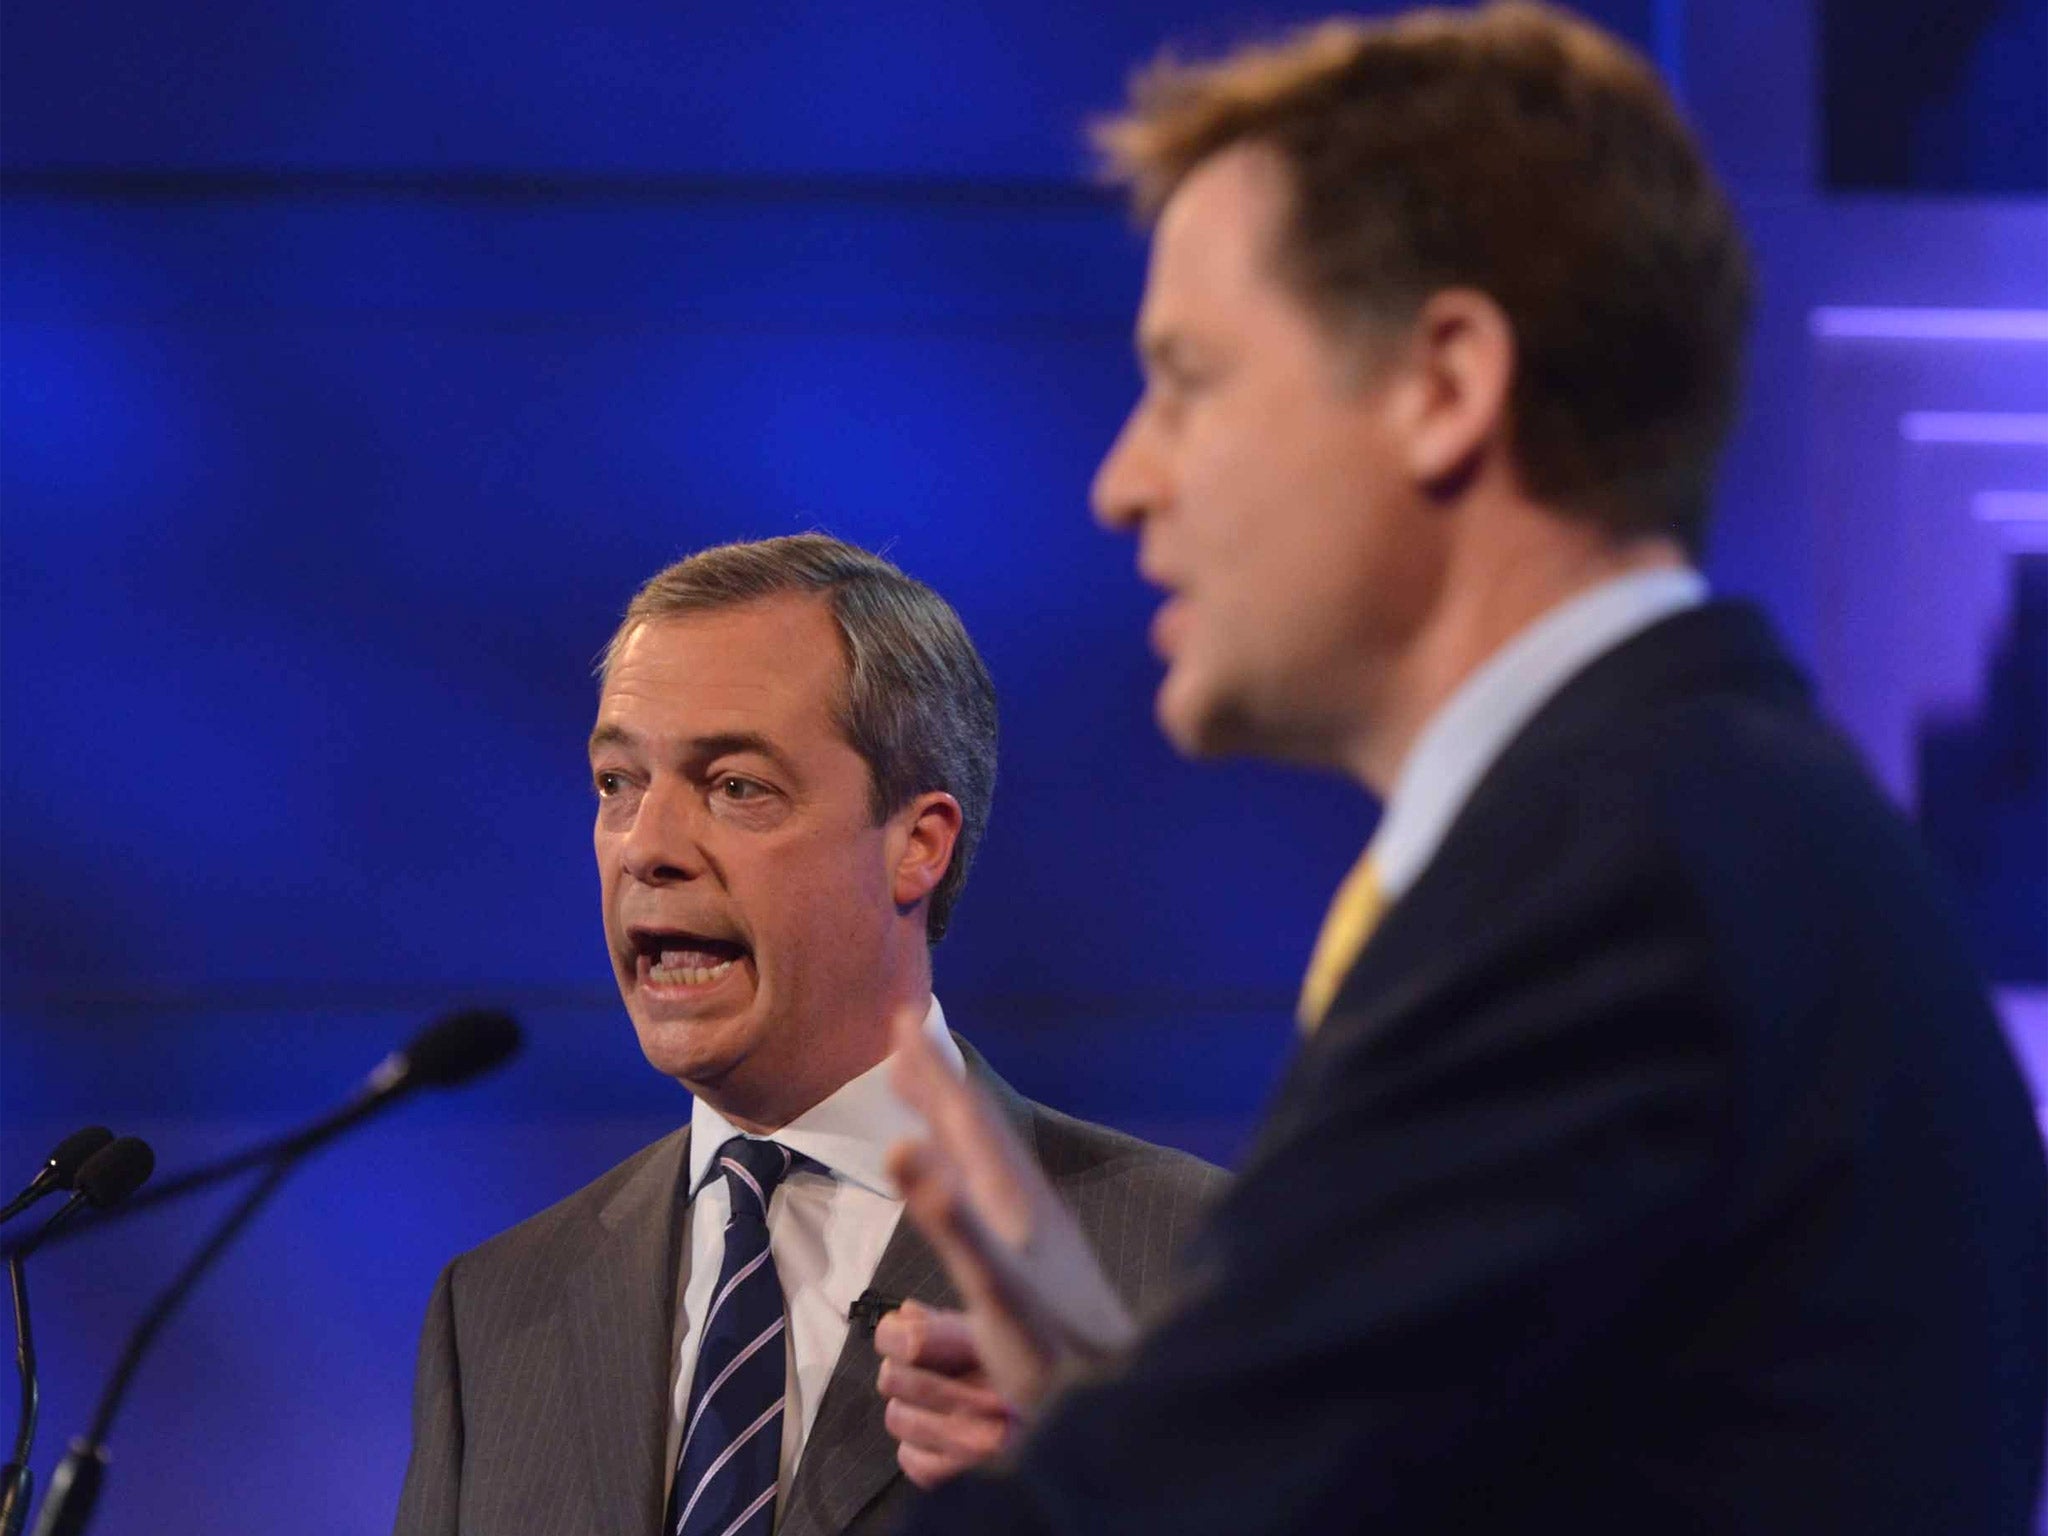 Deputy Prime Minister Nick Clegg and Ukip leader Nigel Farage during their second televised debate